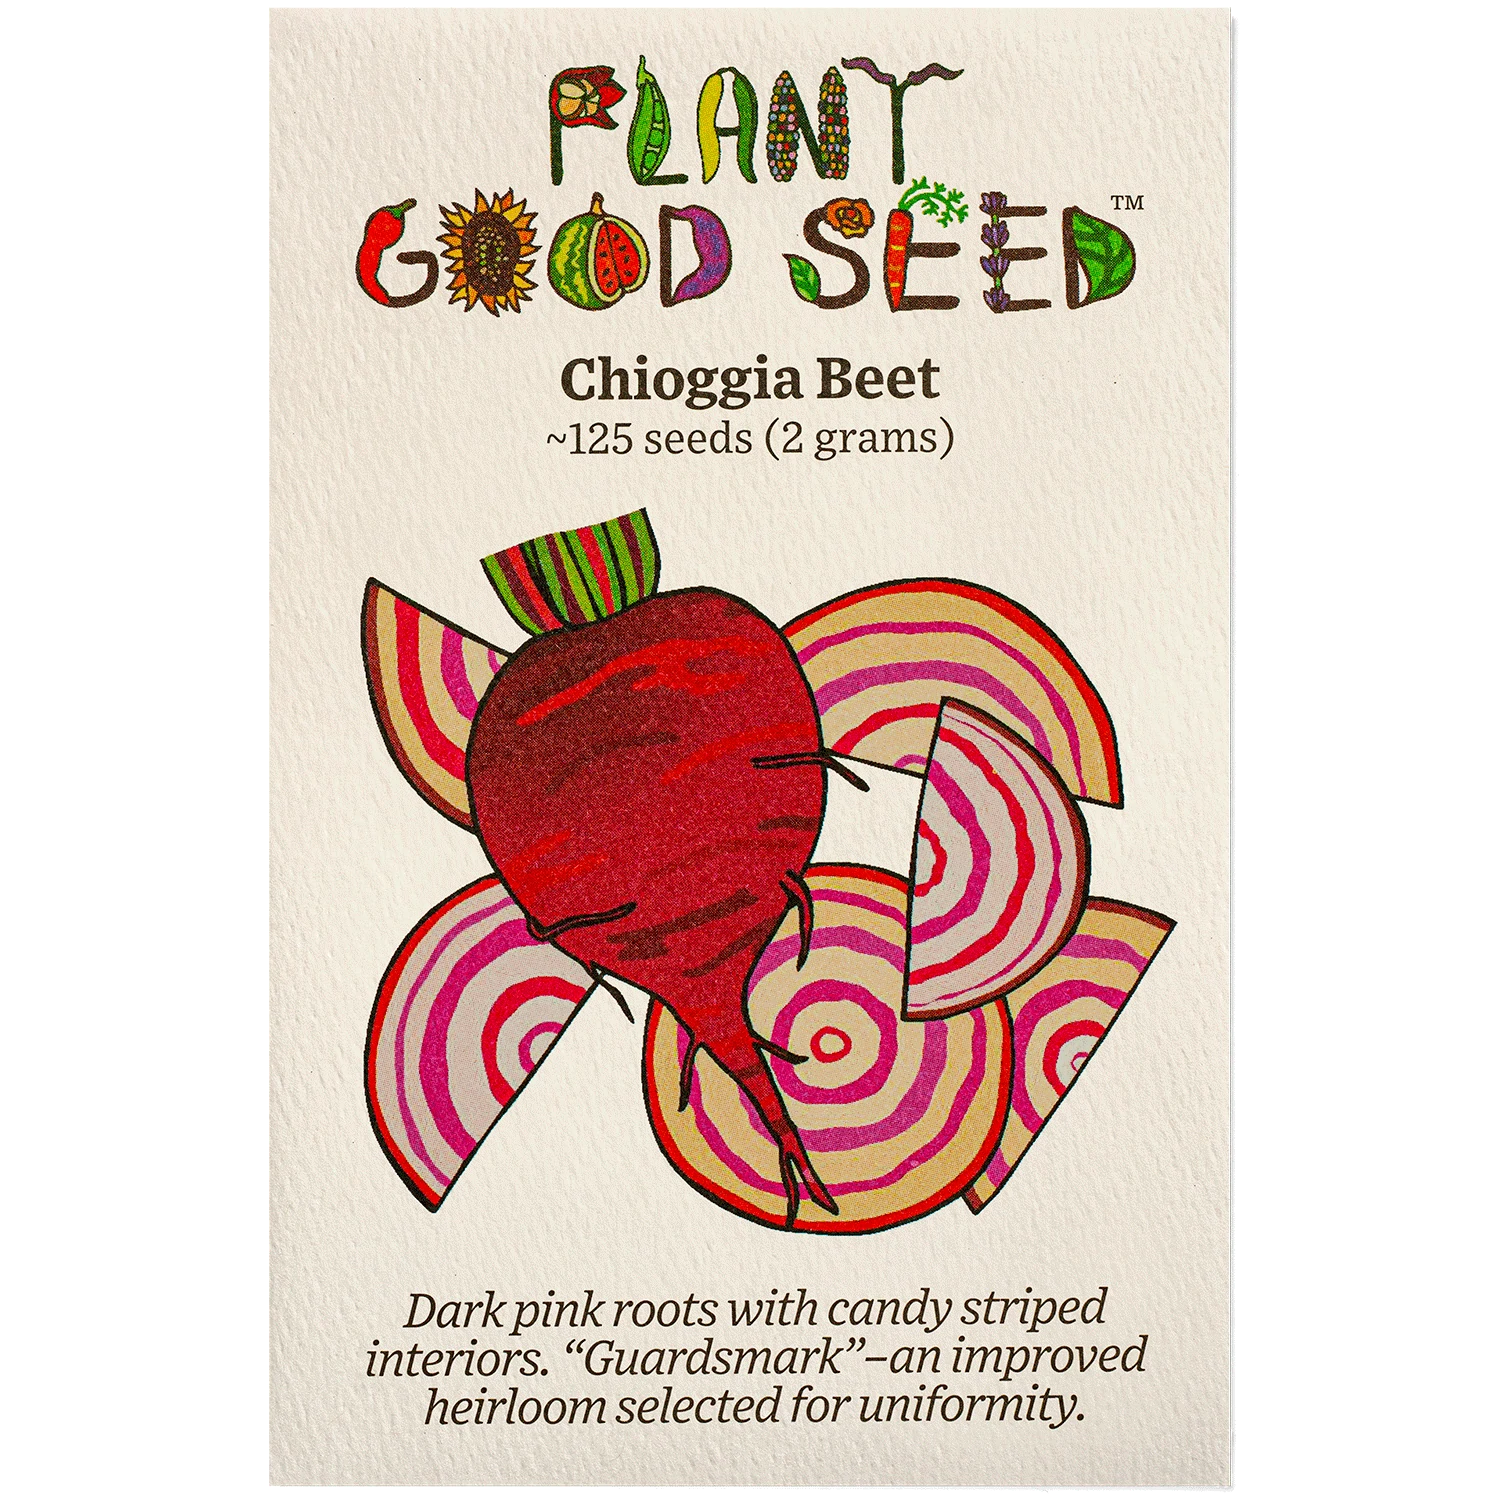 seeds - veggies & more